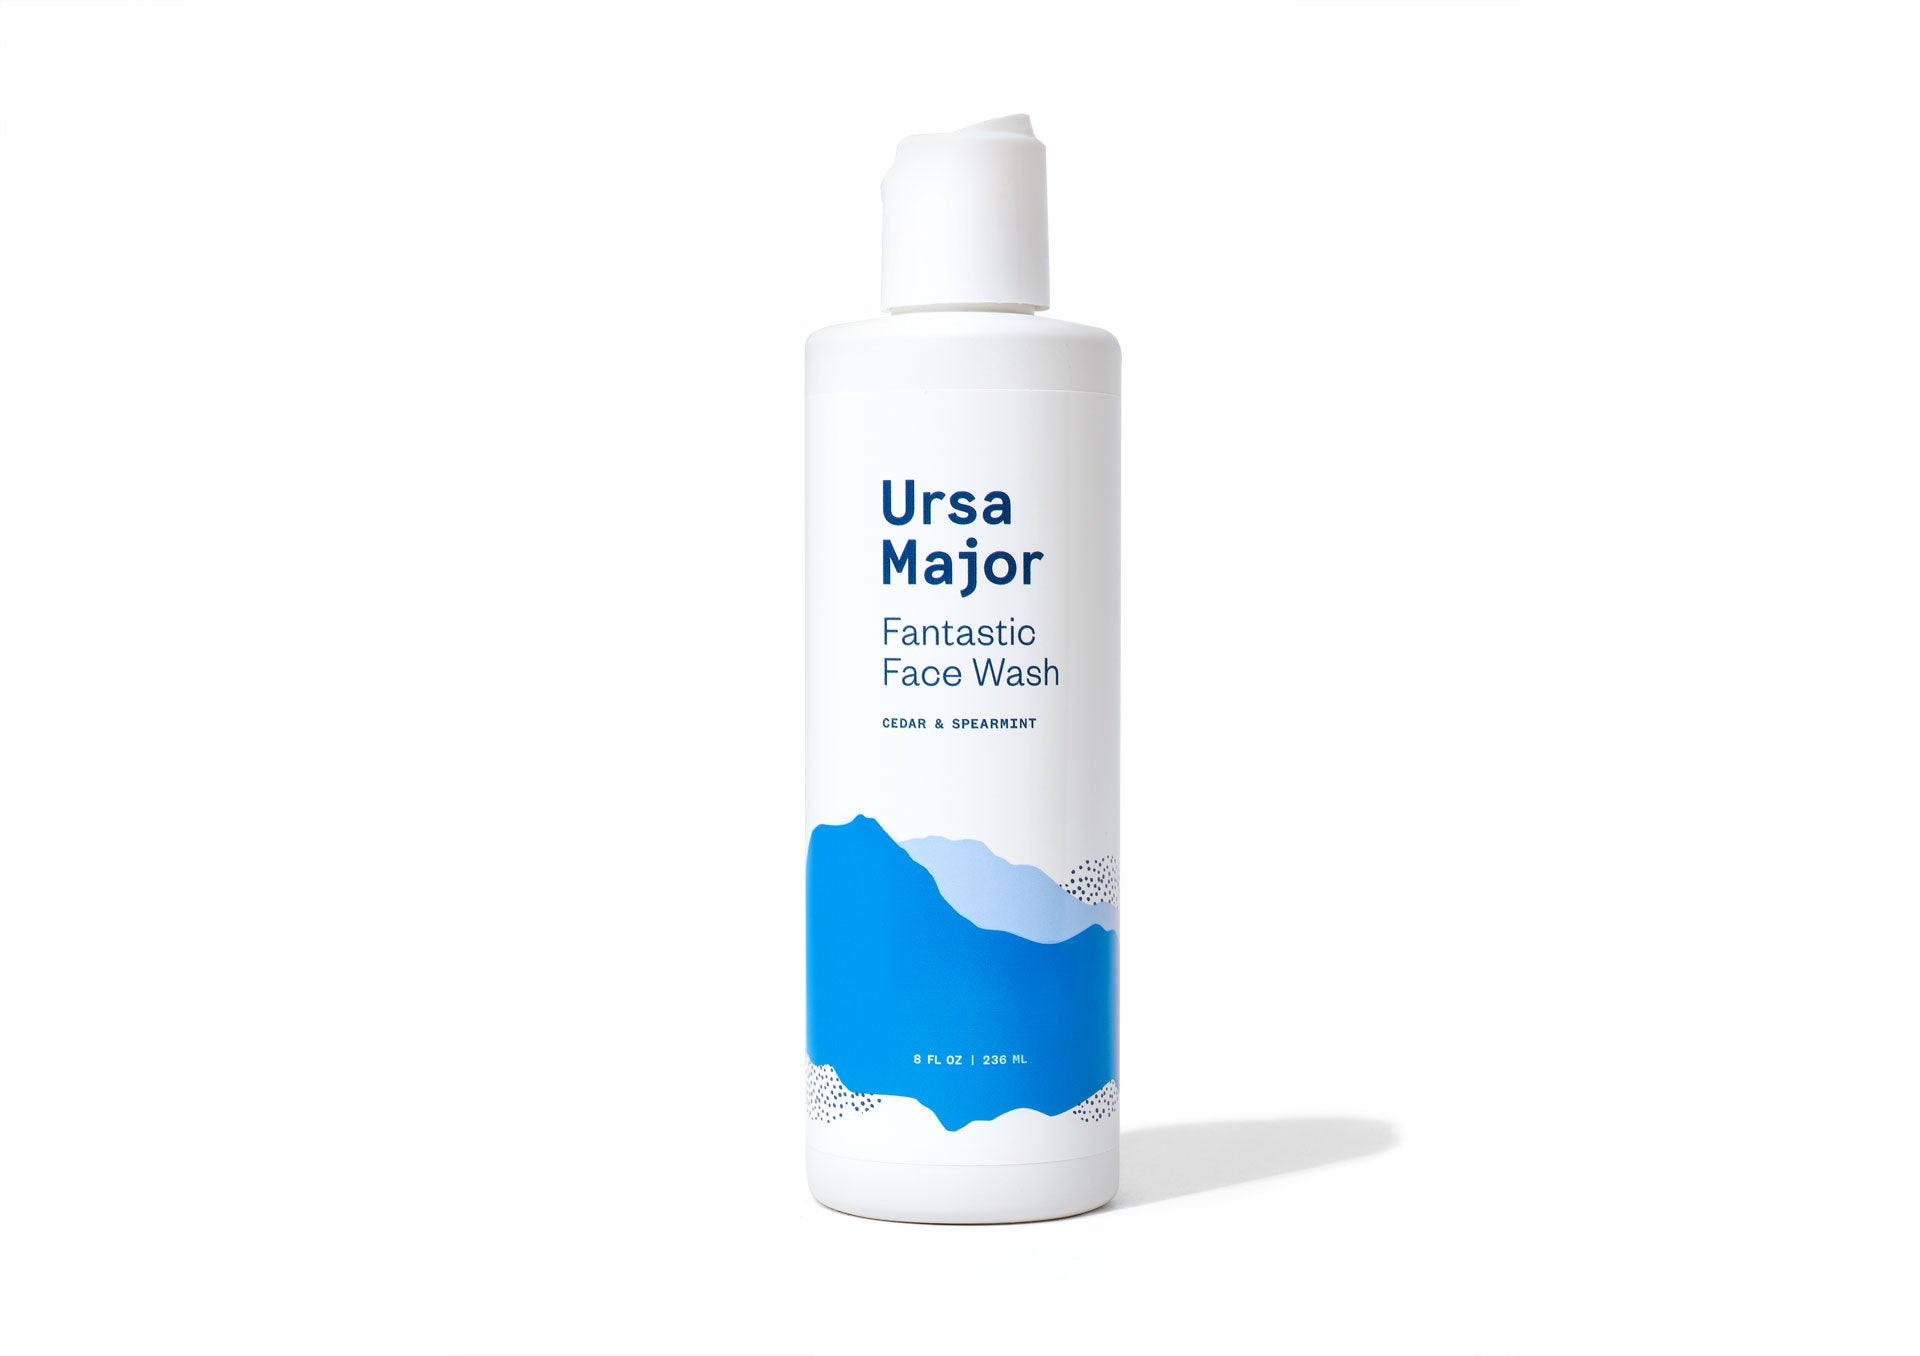 Ursa Major Fantastic Face Wash | Natural, Vegan & Cruelty Free | Daily Foaming Facial Cleanser for Men & Women | 8 ounces